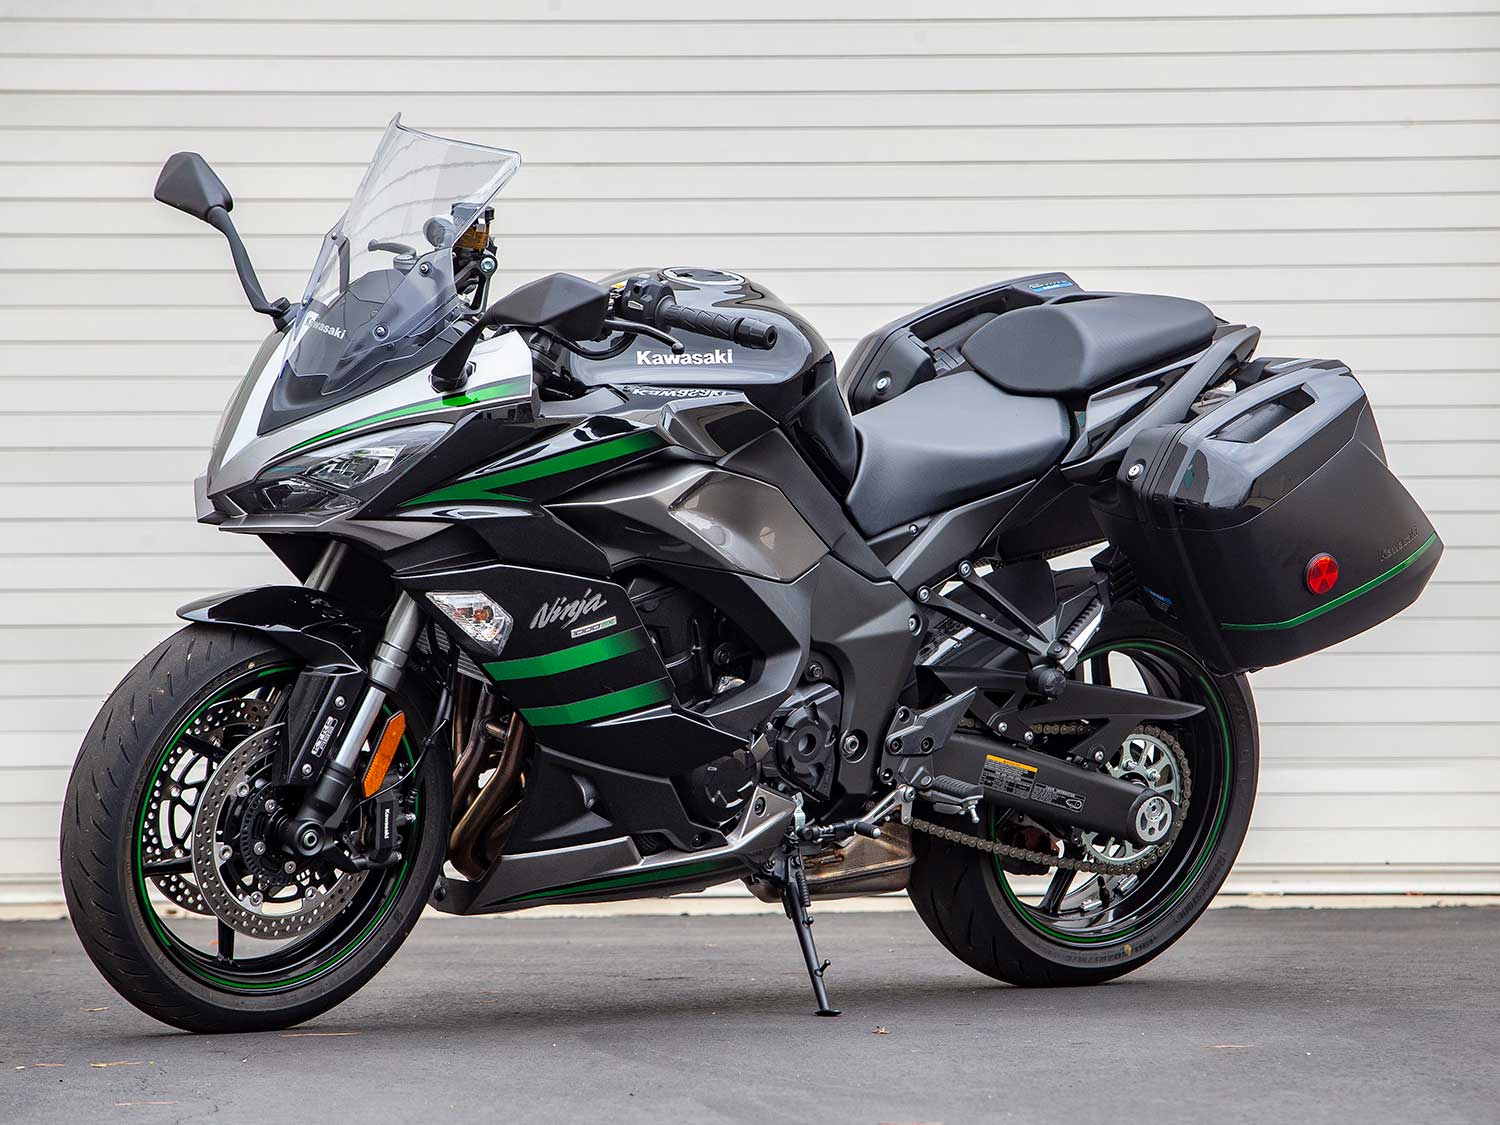 2020 Kawasaki Ninja 1000SX Commute Review | Motorcyclist